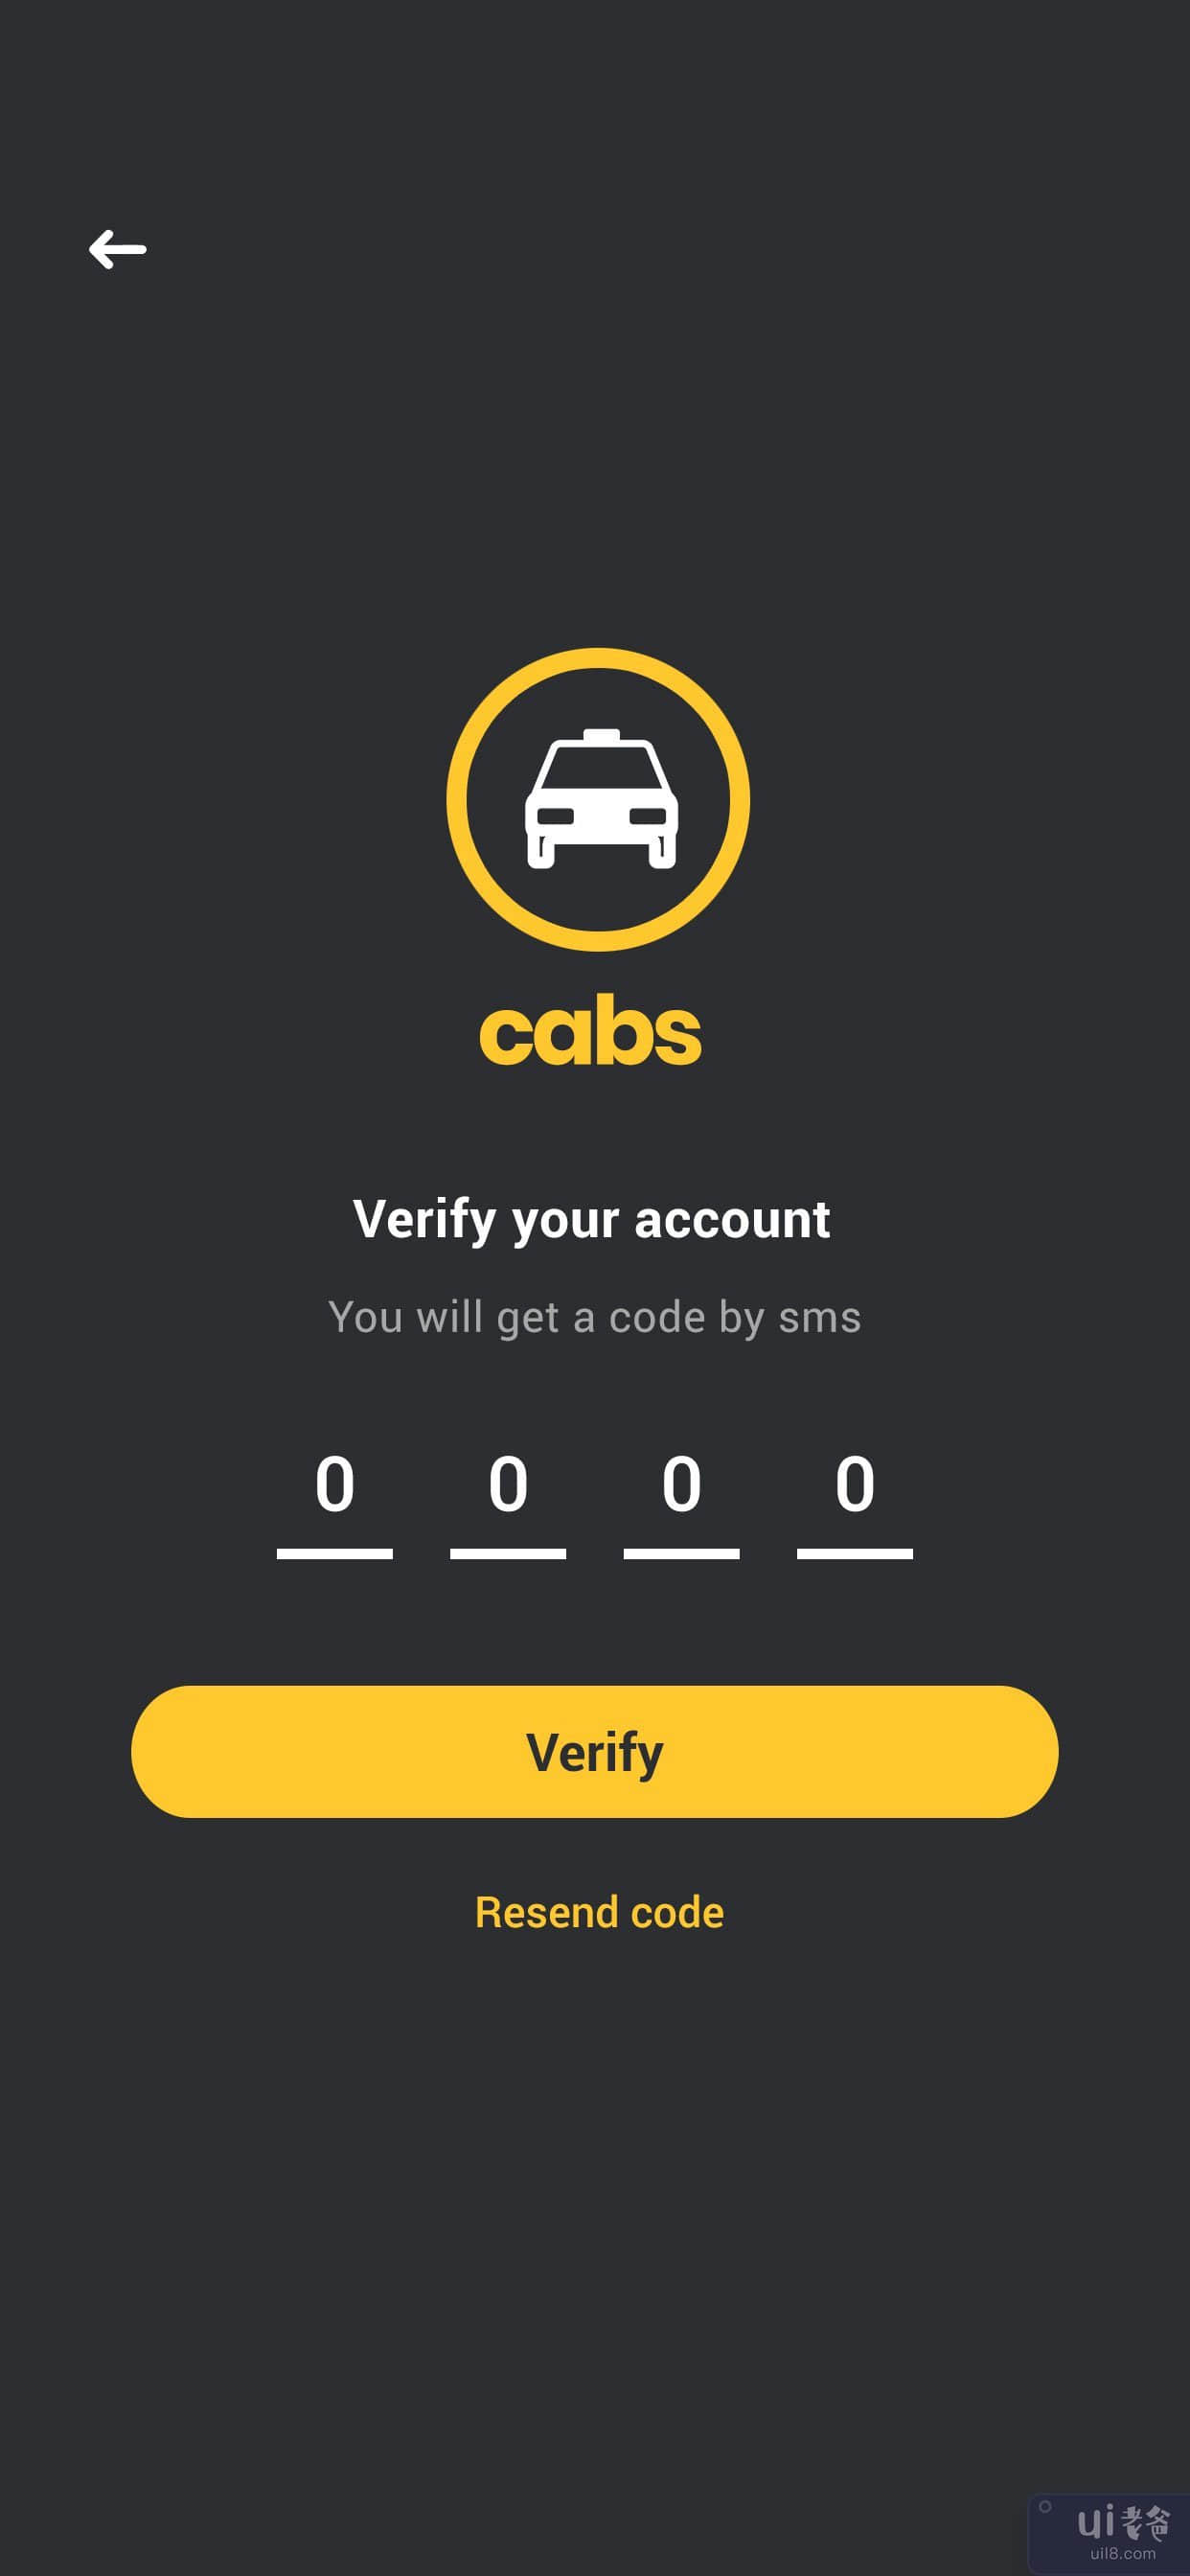 出租车预订移动应用程序第 III 部分(Taxi Booking Mobile App Part lll)插图3